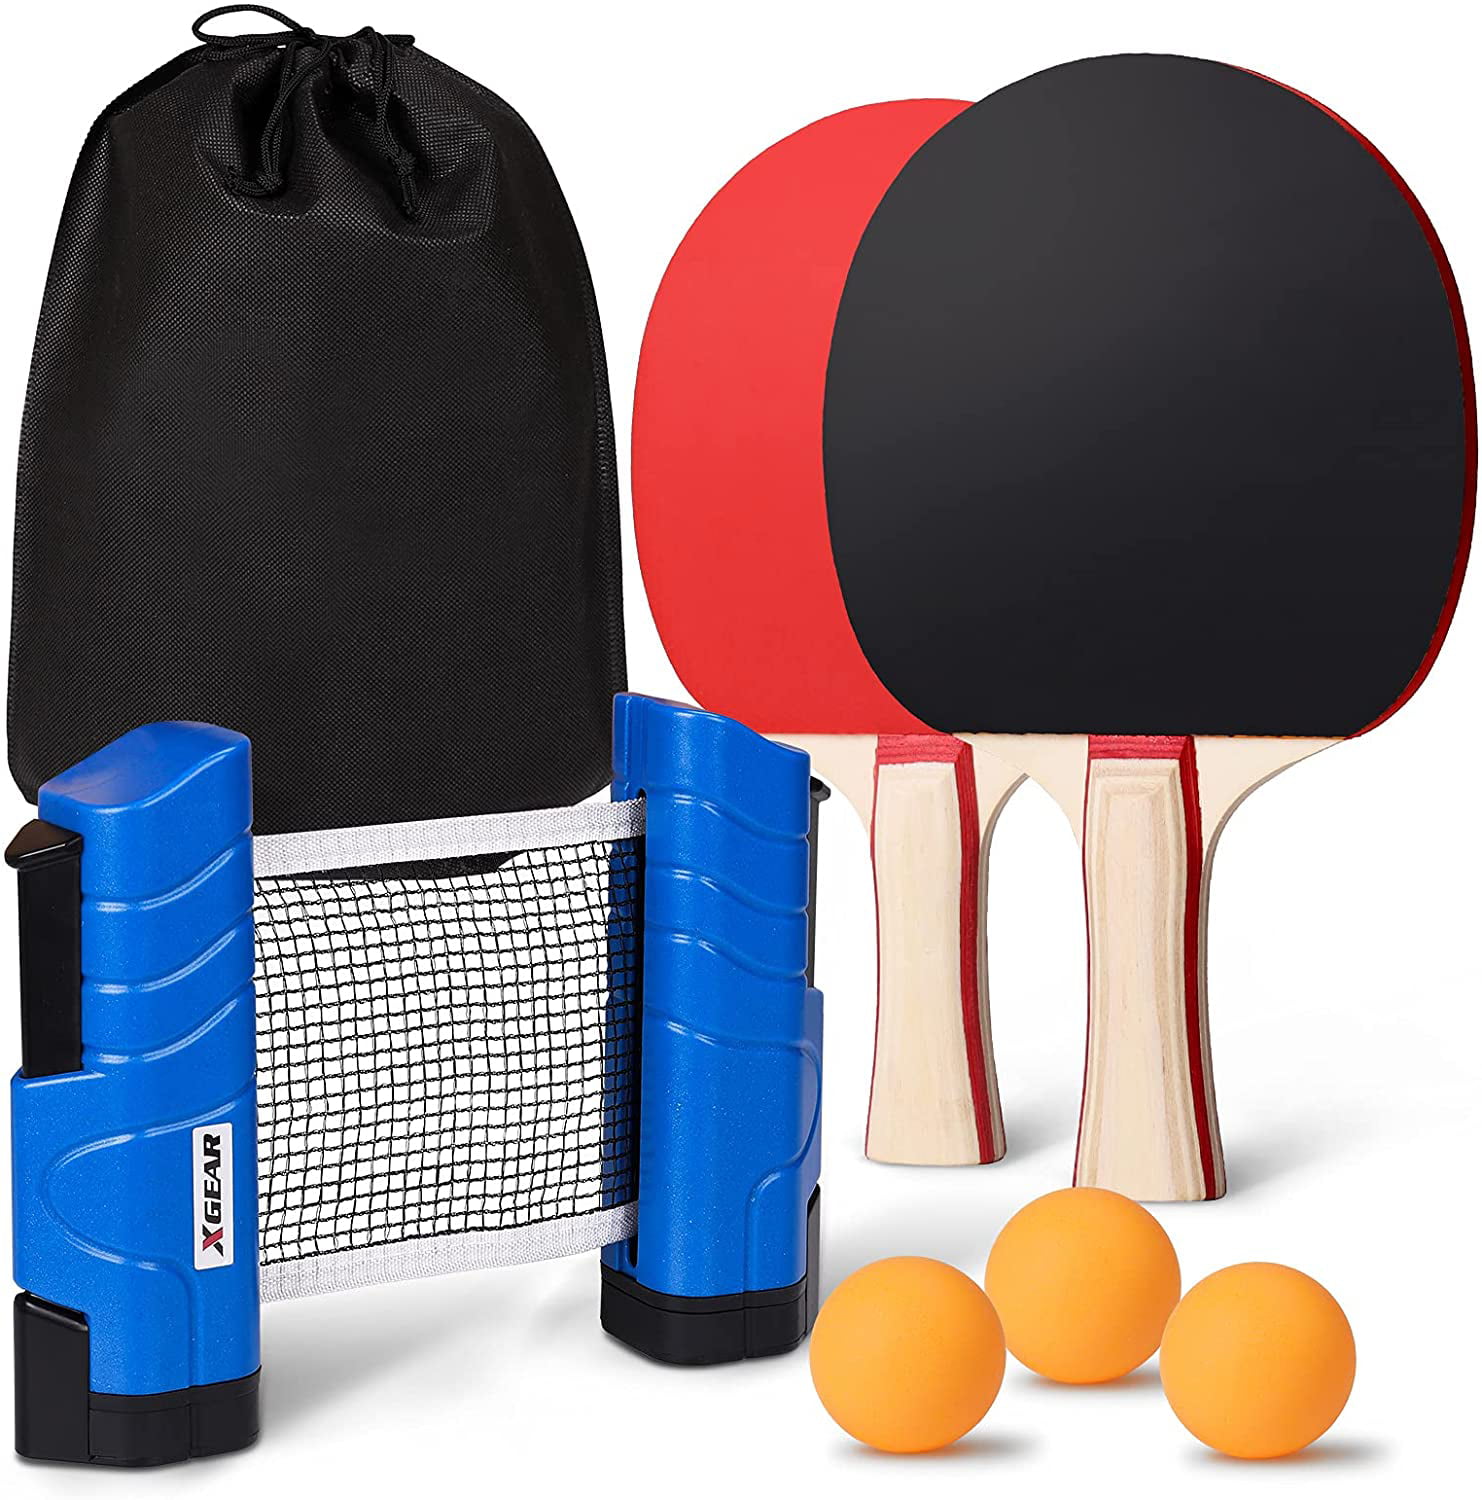 Professional Table Tennis Ping Pong Racket Paddle Bat+3pcs Balls Bag 1Set New 